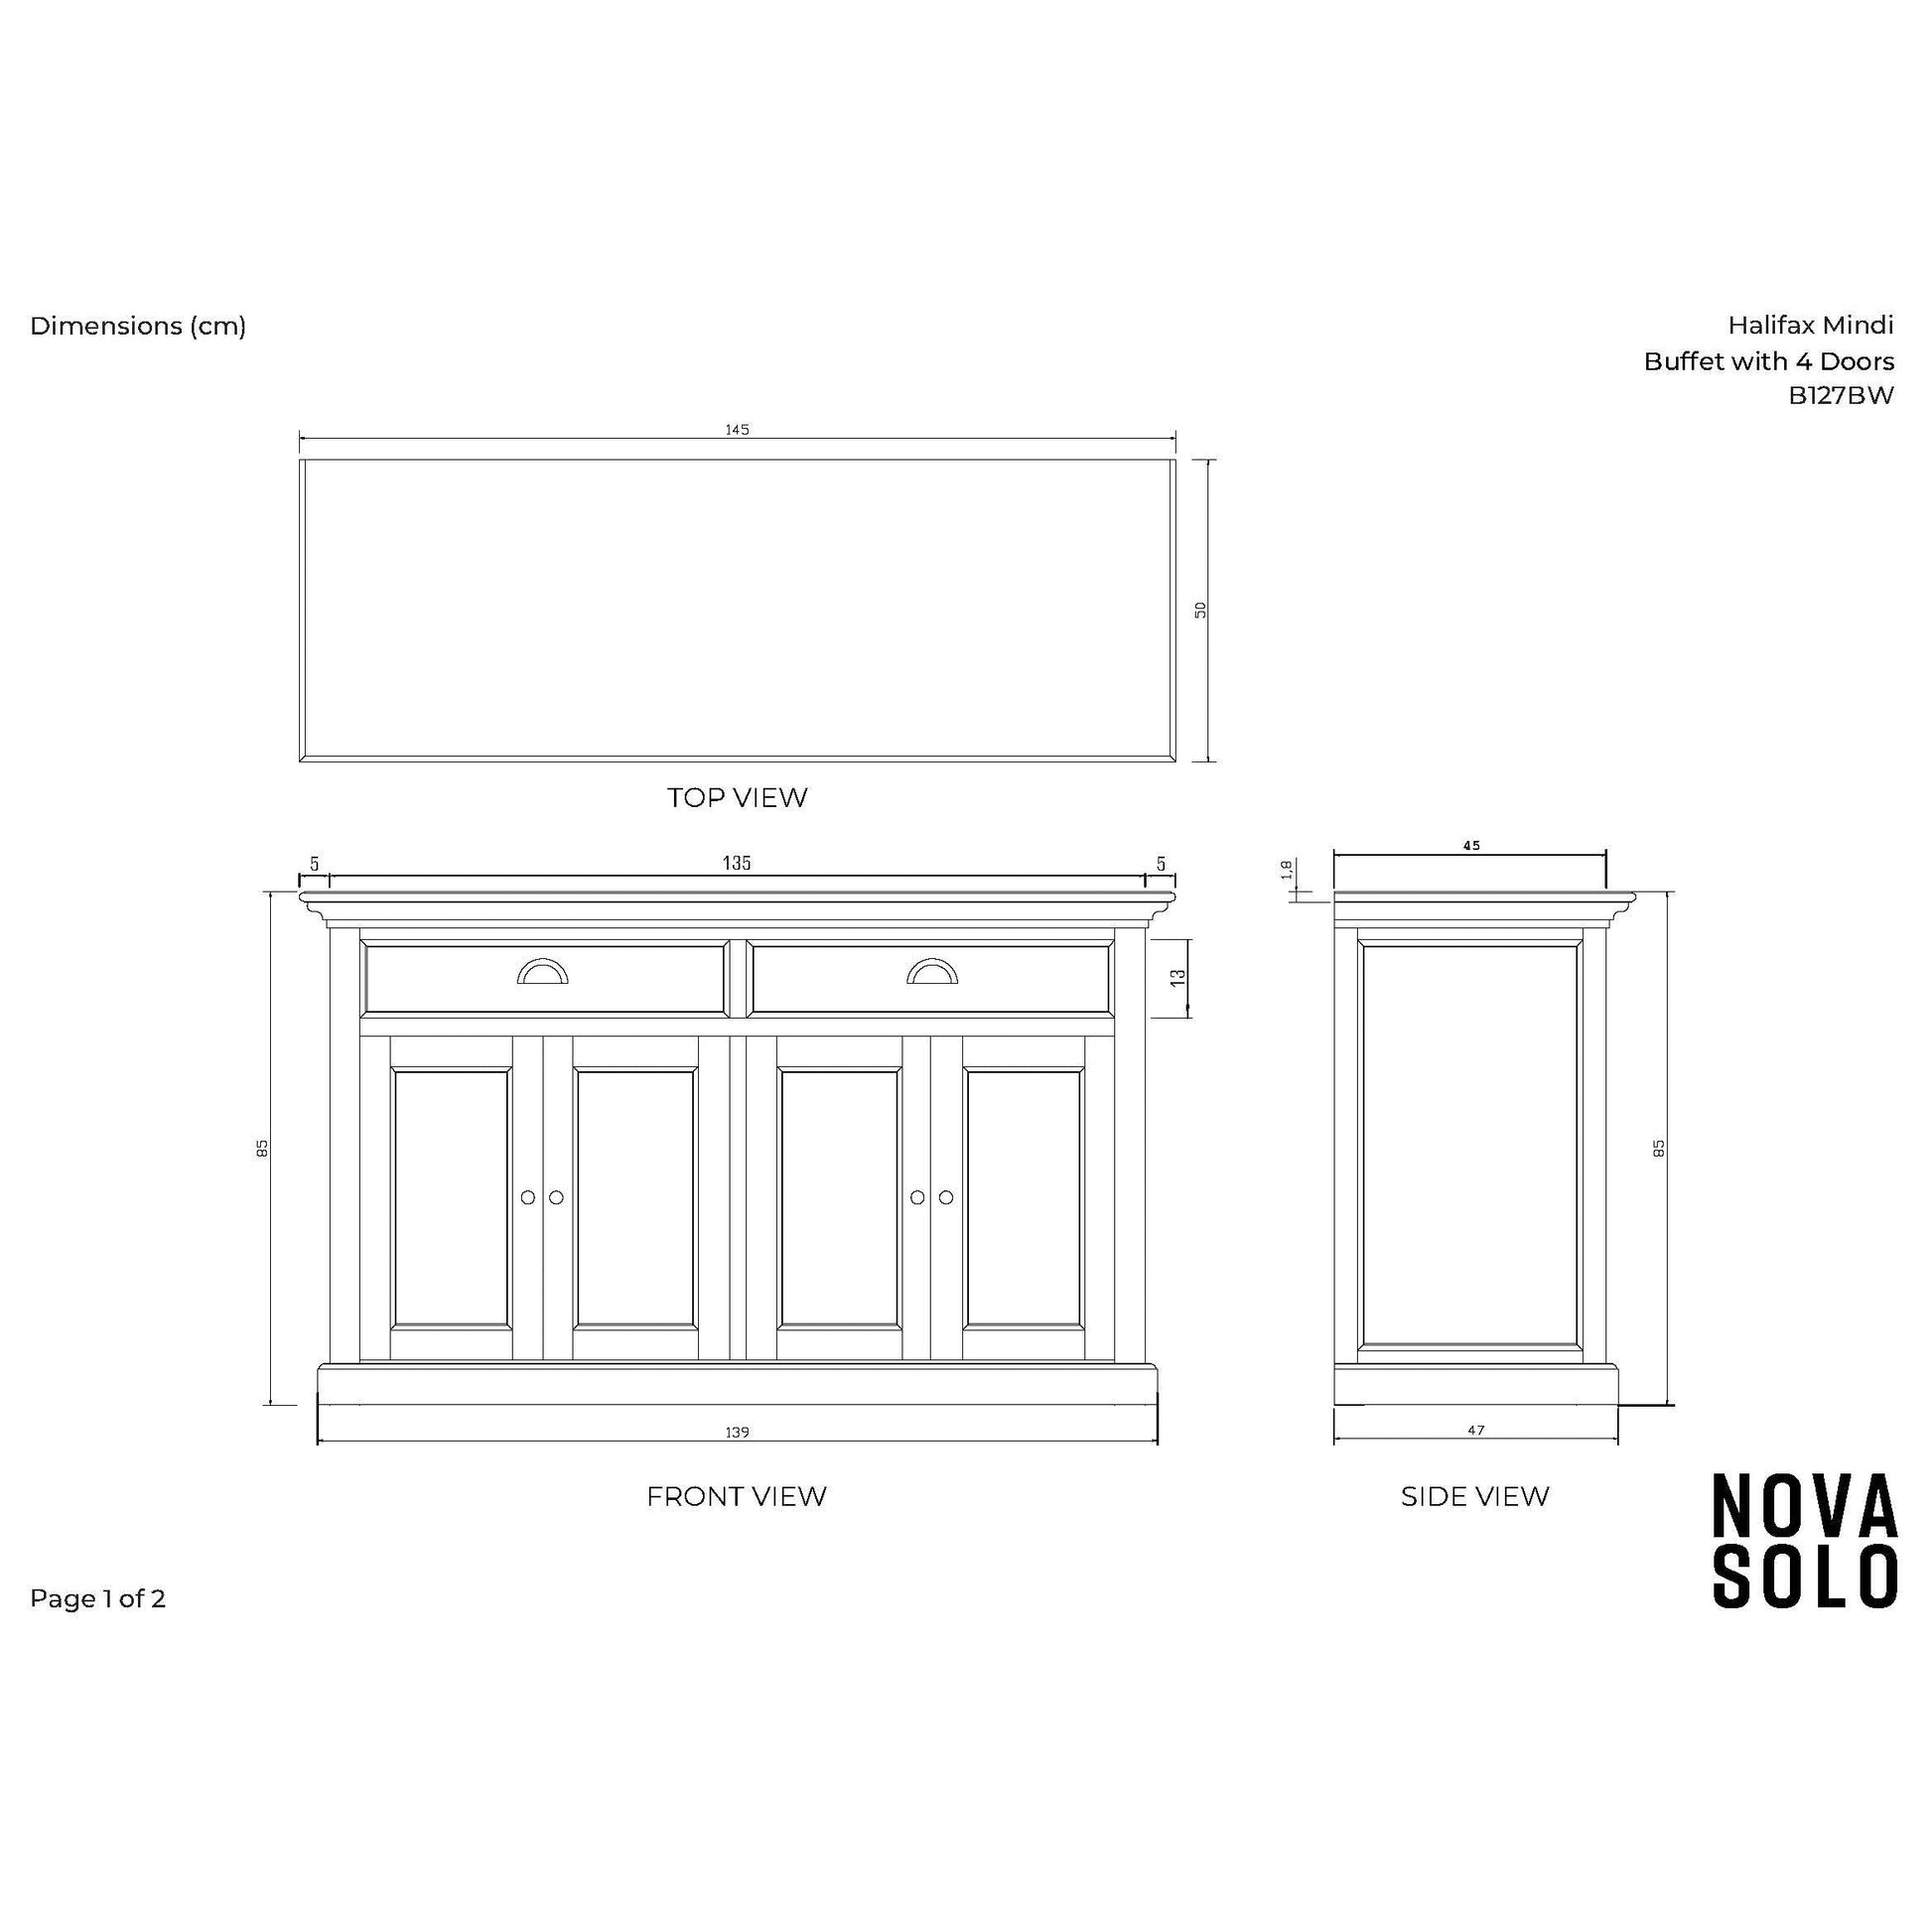 NovaSolo Halifax Mindi 57" Black Mindi Wood Buffet With 4 Doors & 2 Drawers